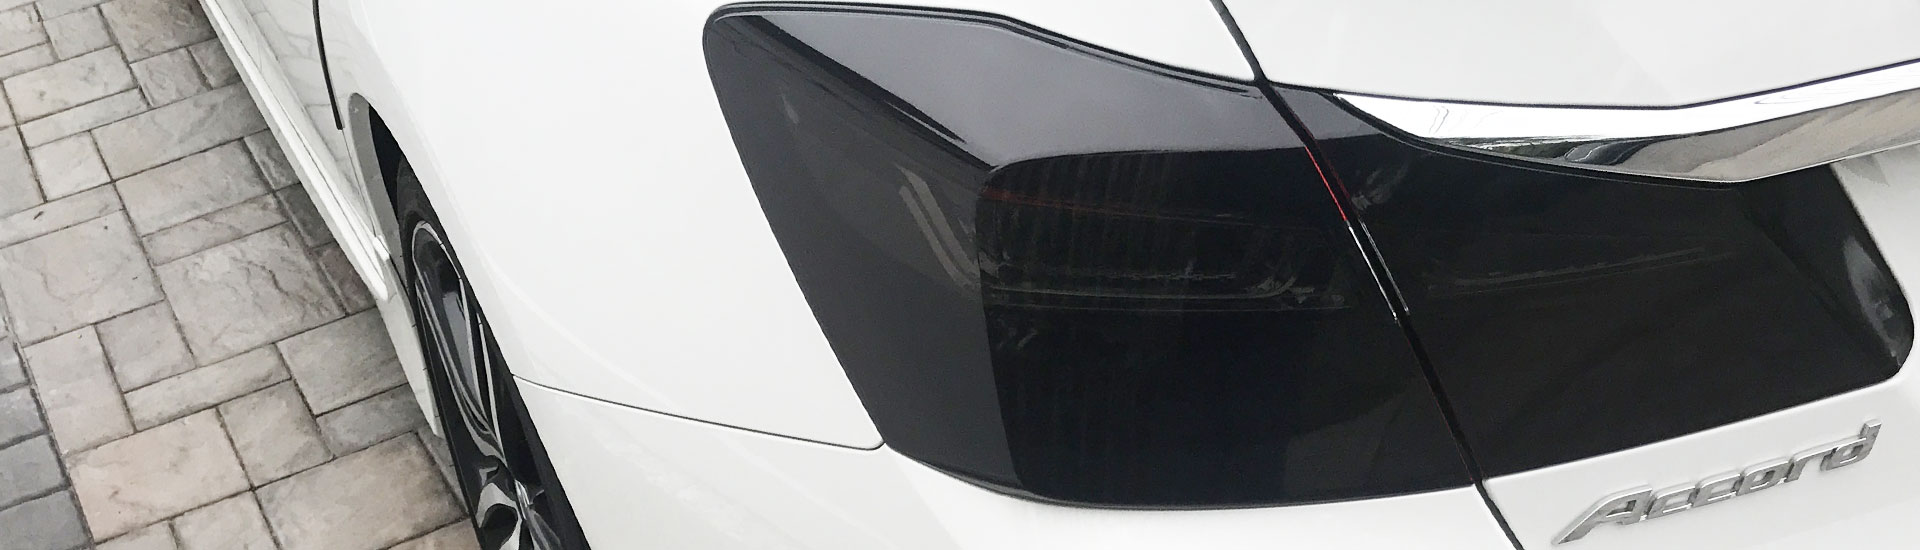 Honda Accord Tail Light Tint Covers